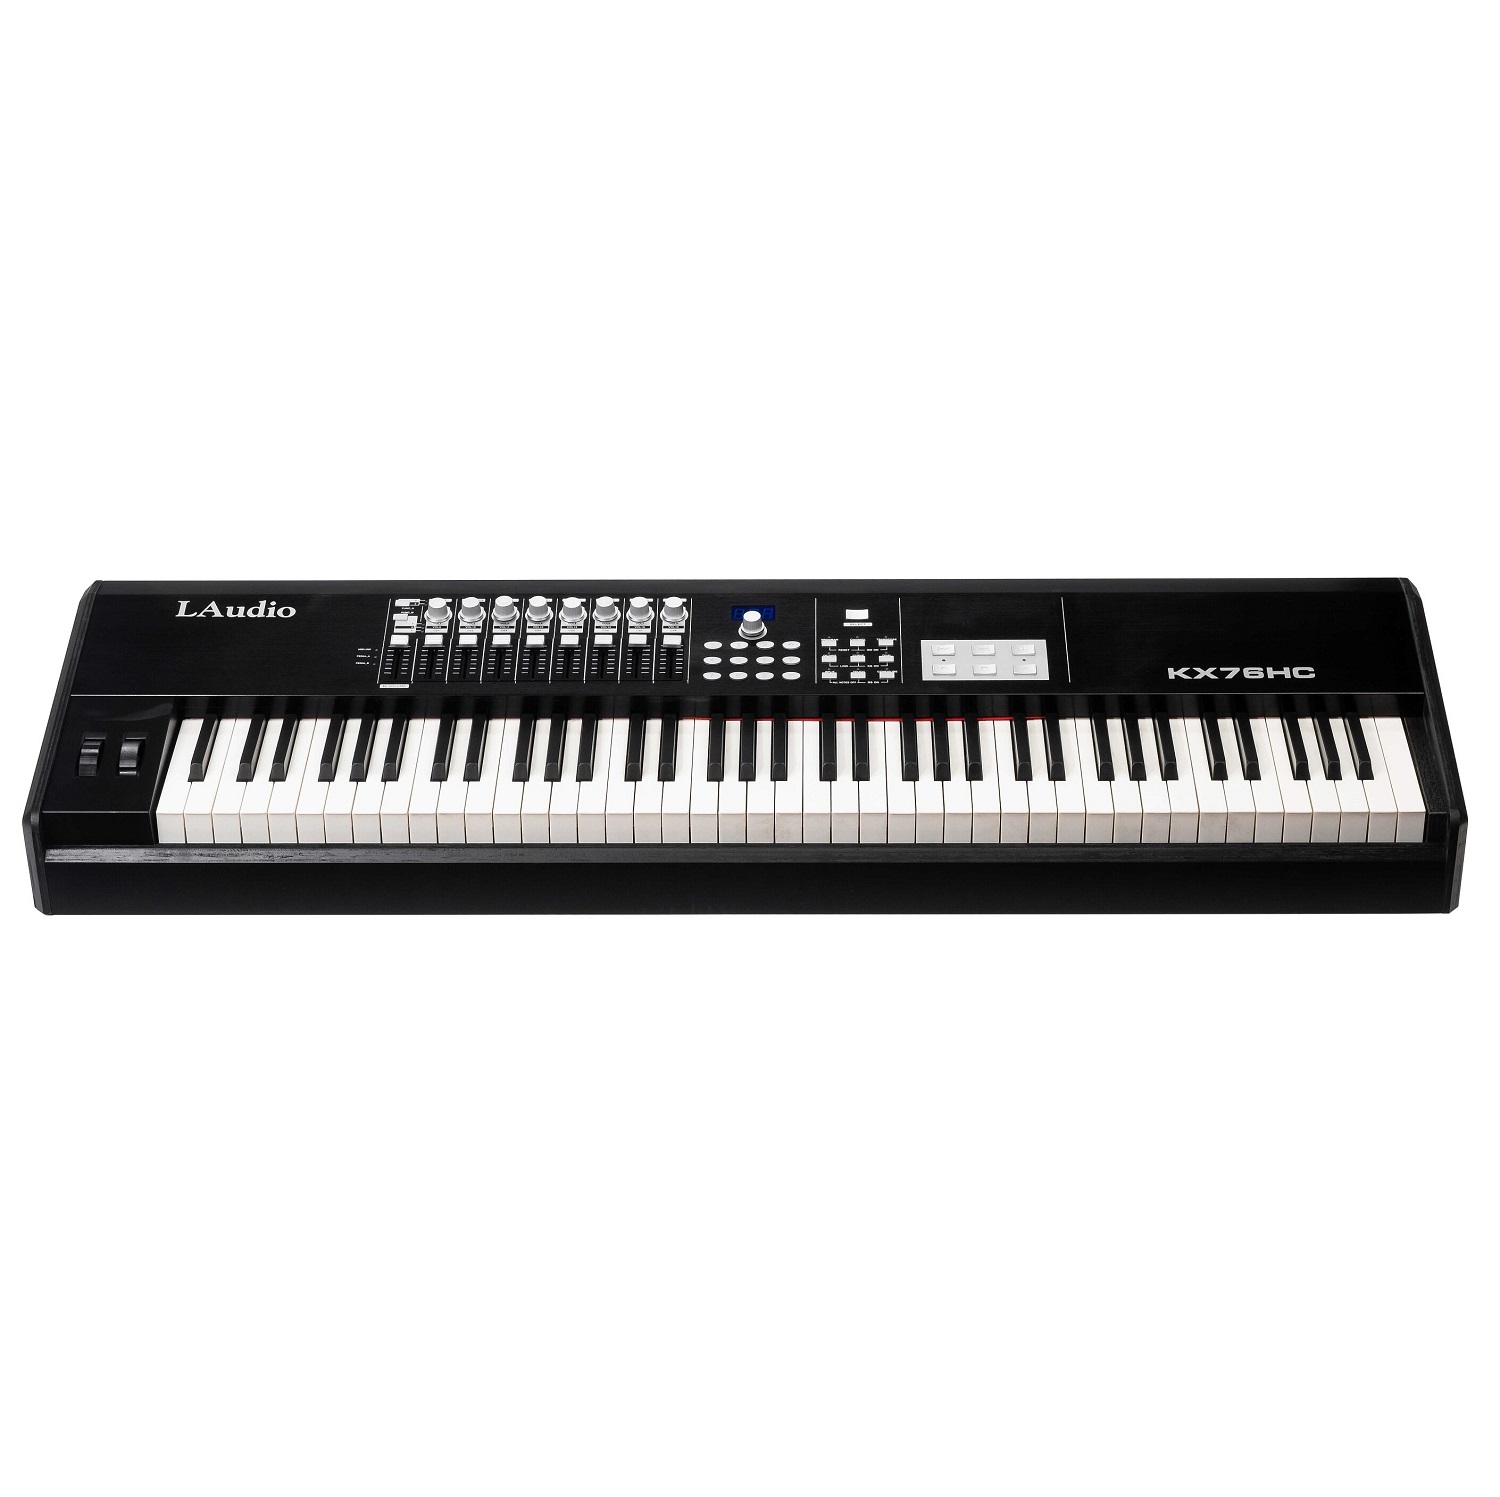 MIDI клавиатуры L Audio KX76HC midi клавиатуры l audio kx76hc